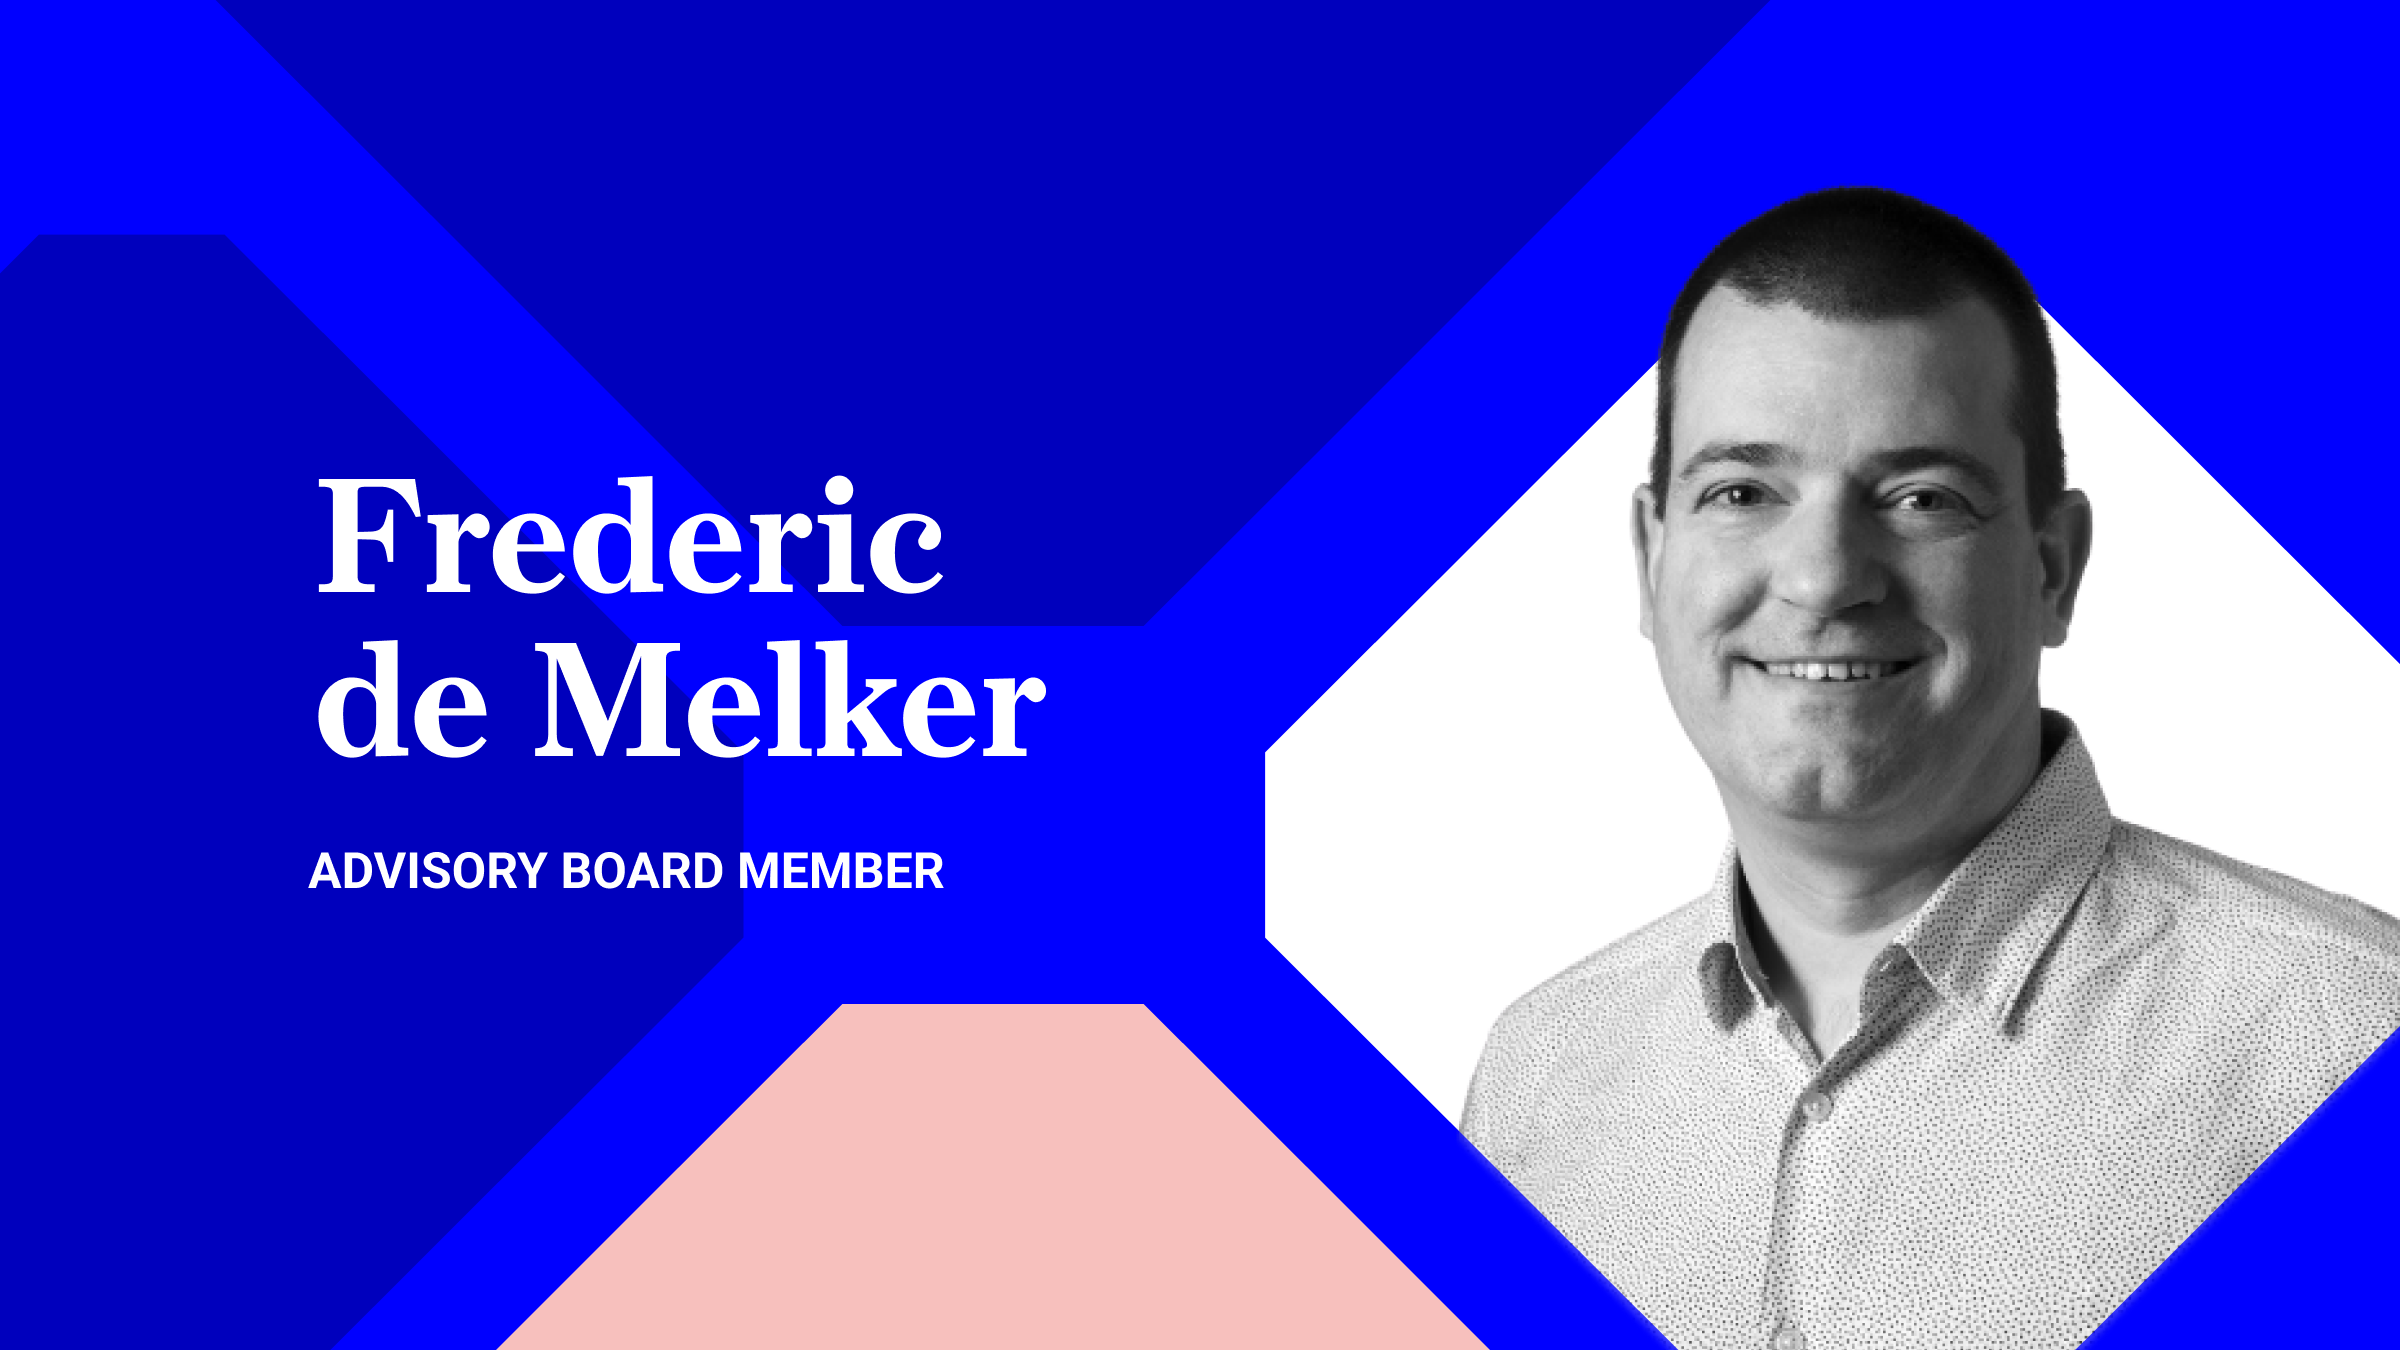 Frederic de Melker joins InvestSuite's Advisory Board